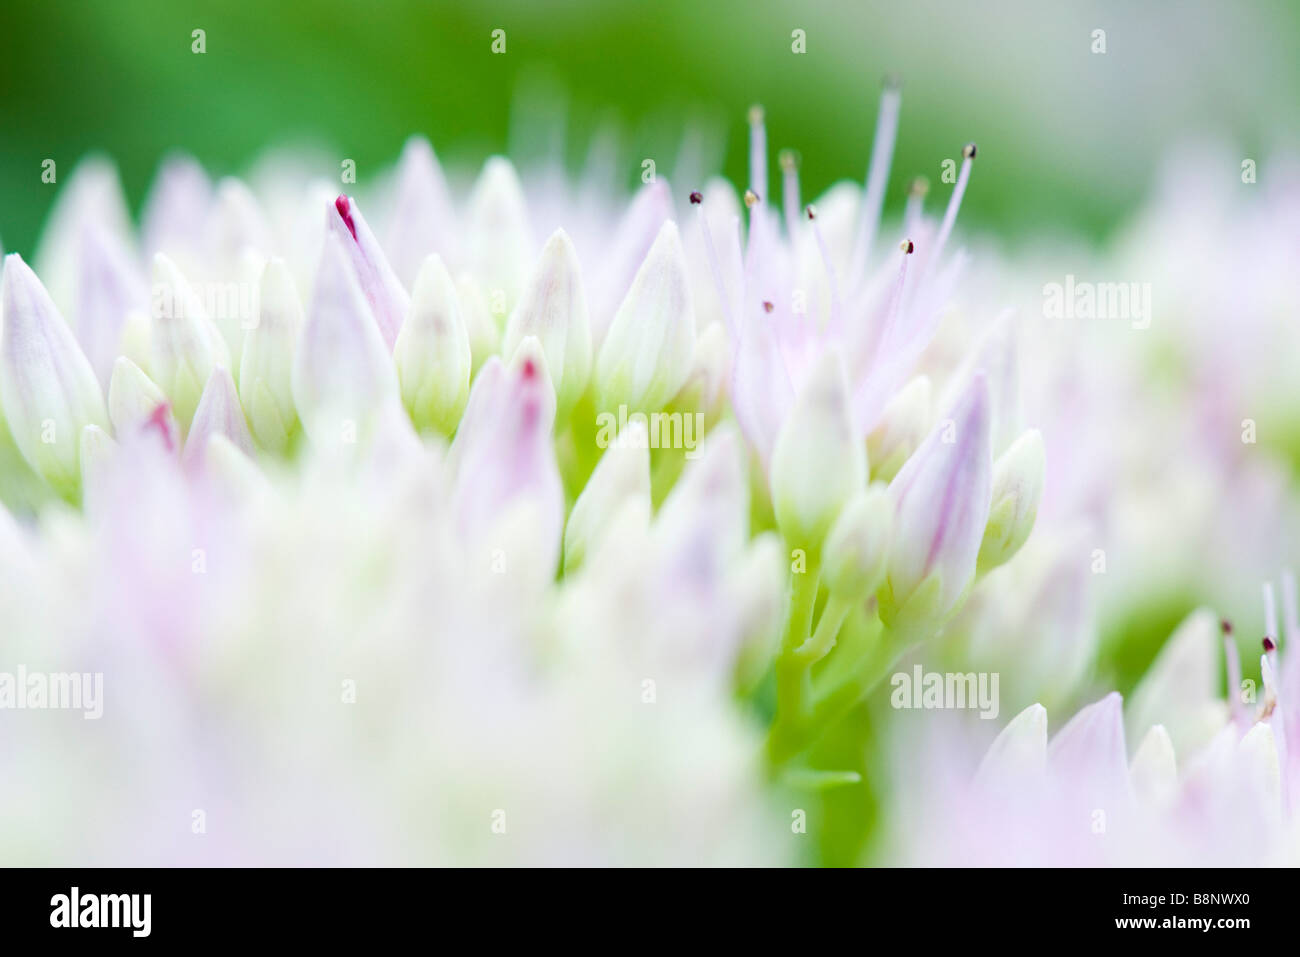 Sedum flower buds, extreme close-up Stock Photo